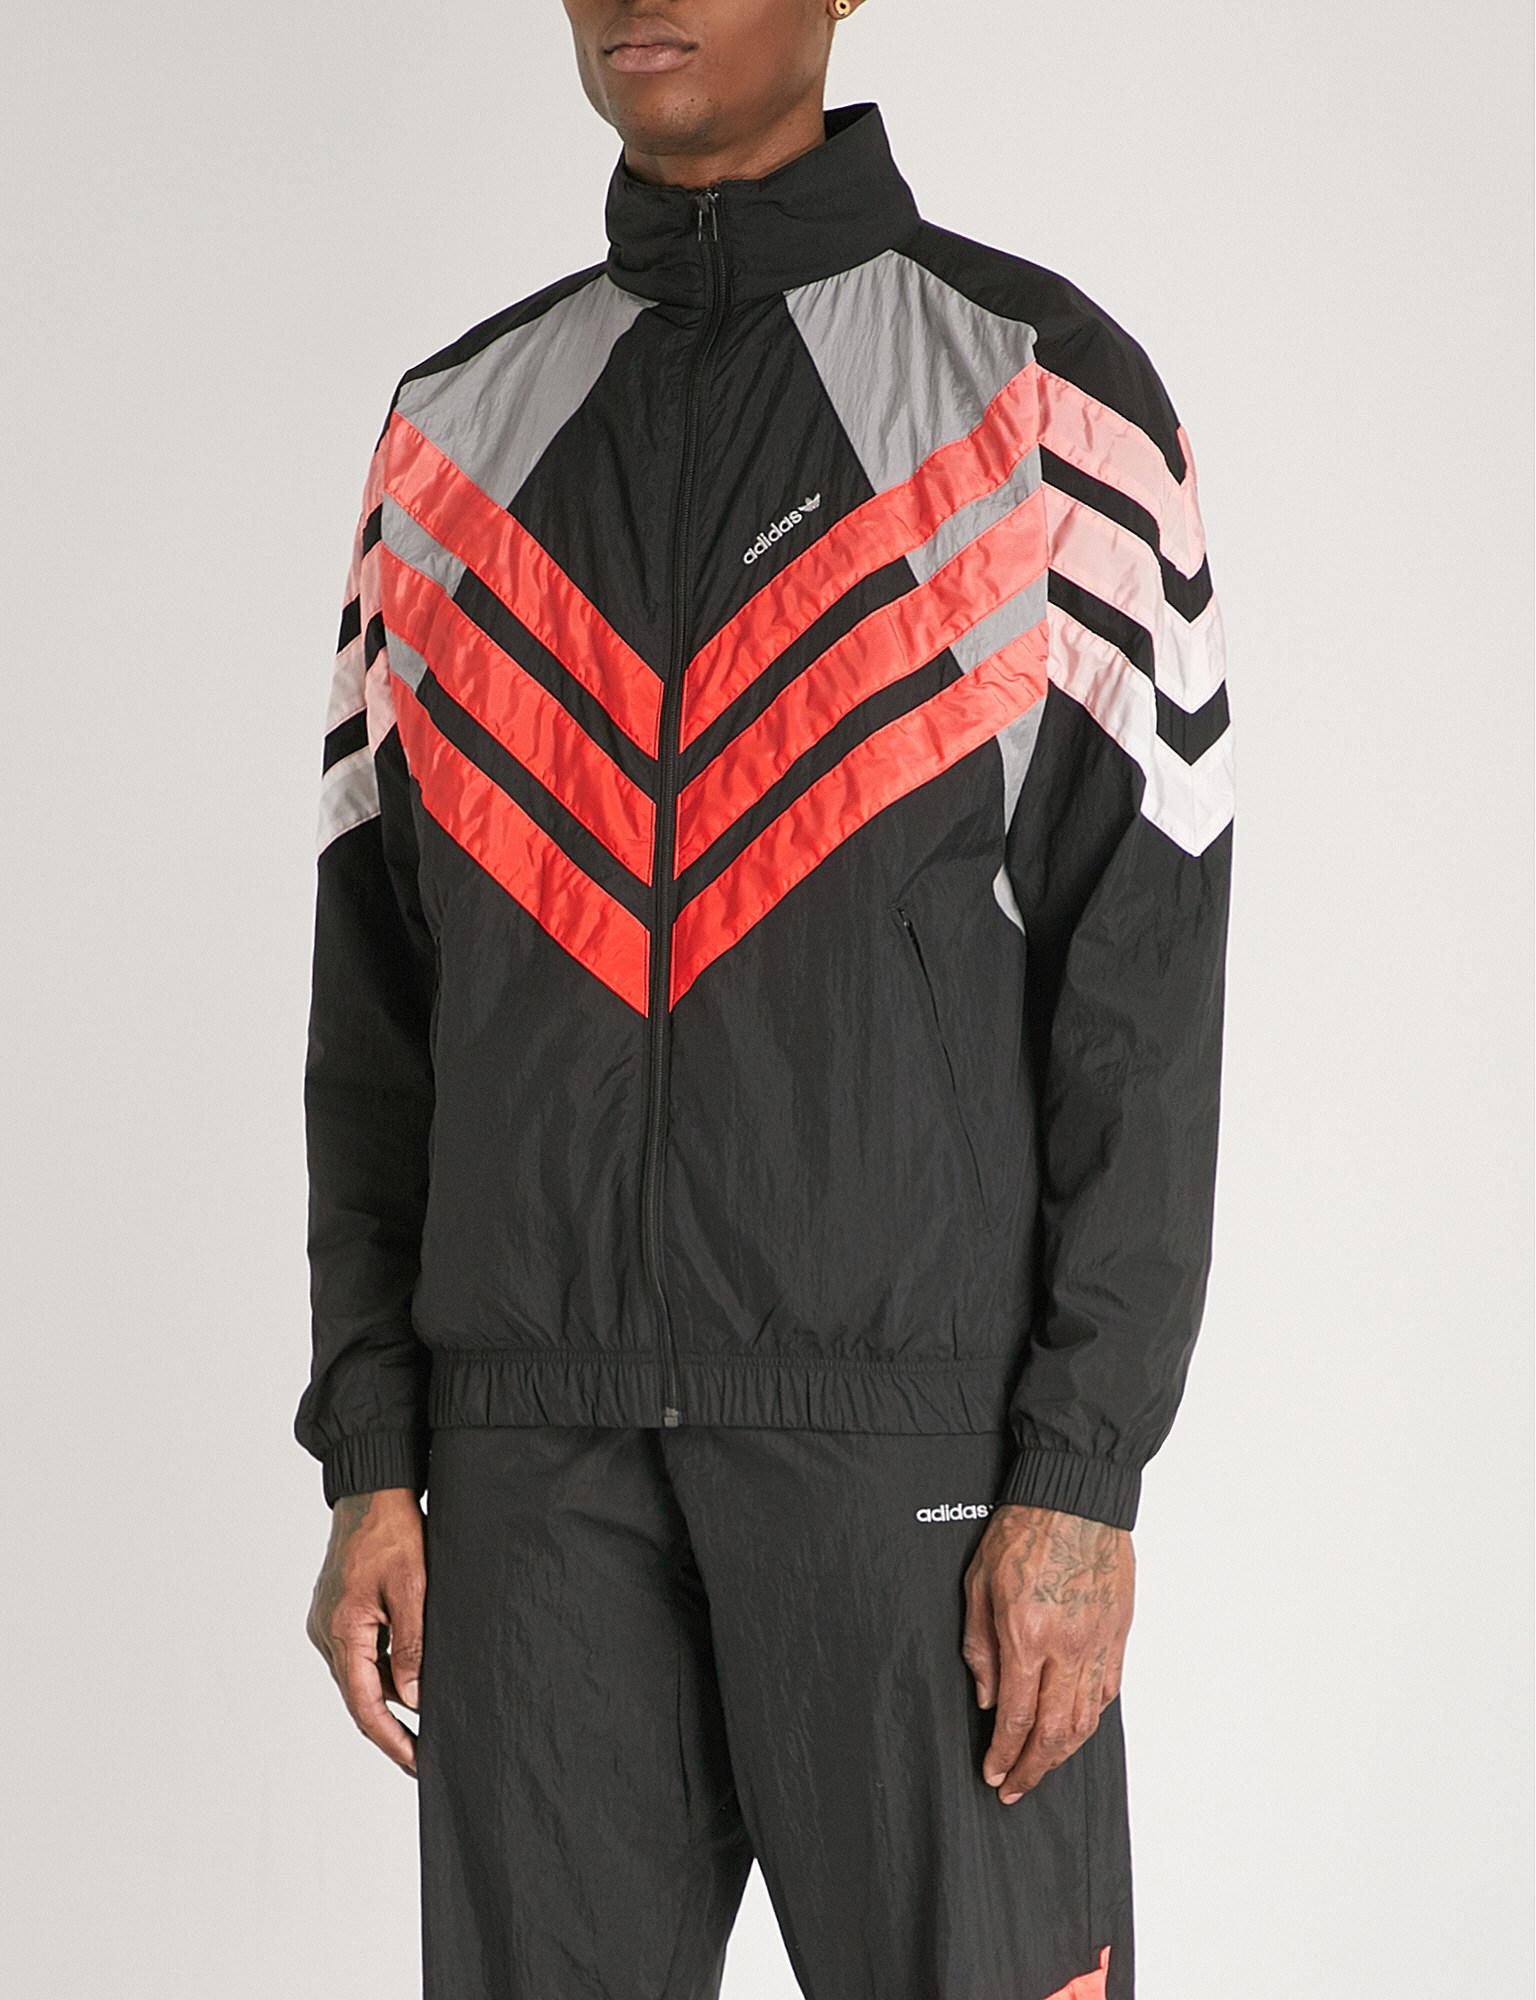 adidas Tironti Shell Windbreaker Jacket for Men - Lyst